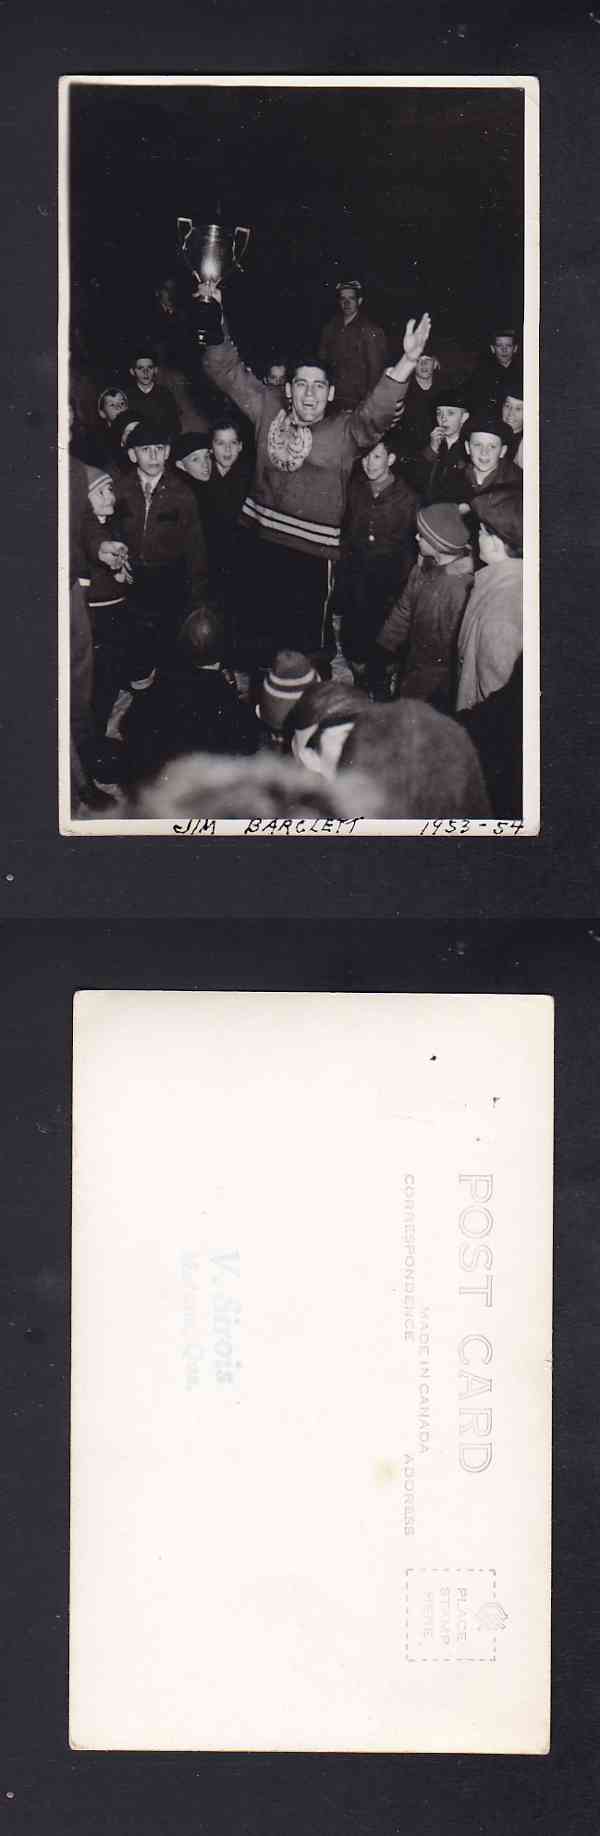 1953-54 MATANE RED ROCK HOCKEY TEAM POST CARD photo